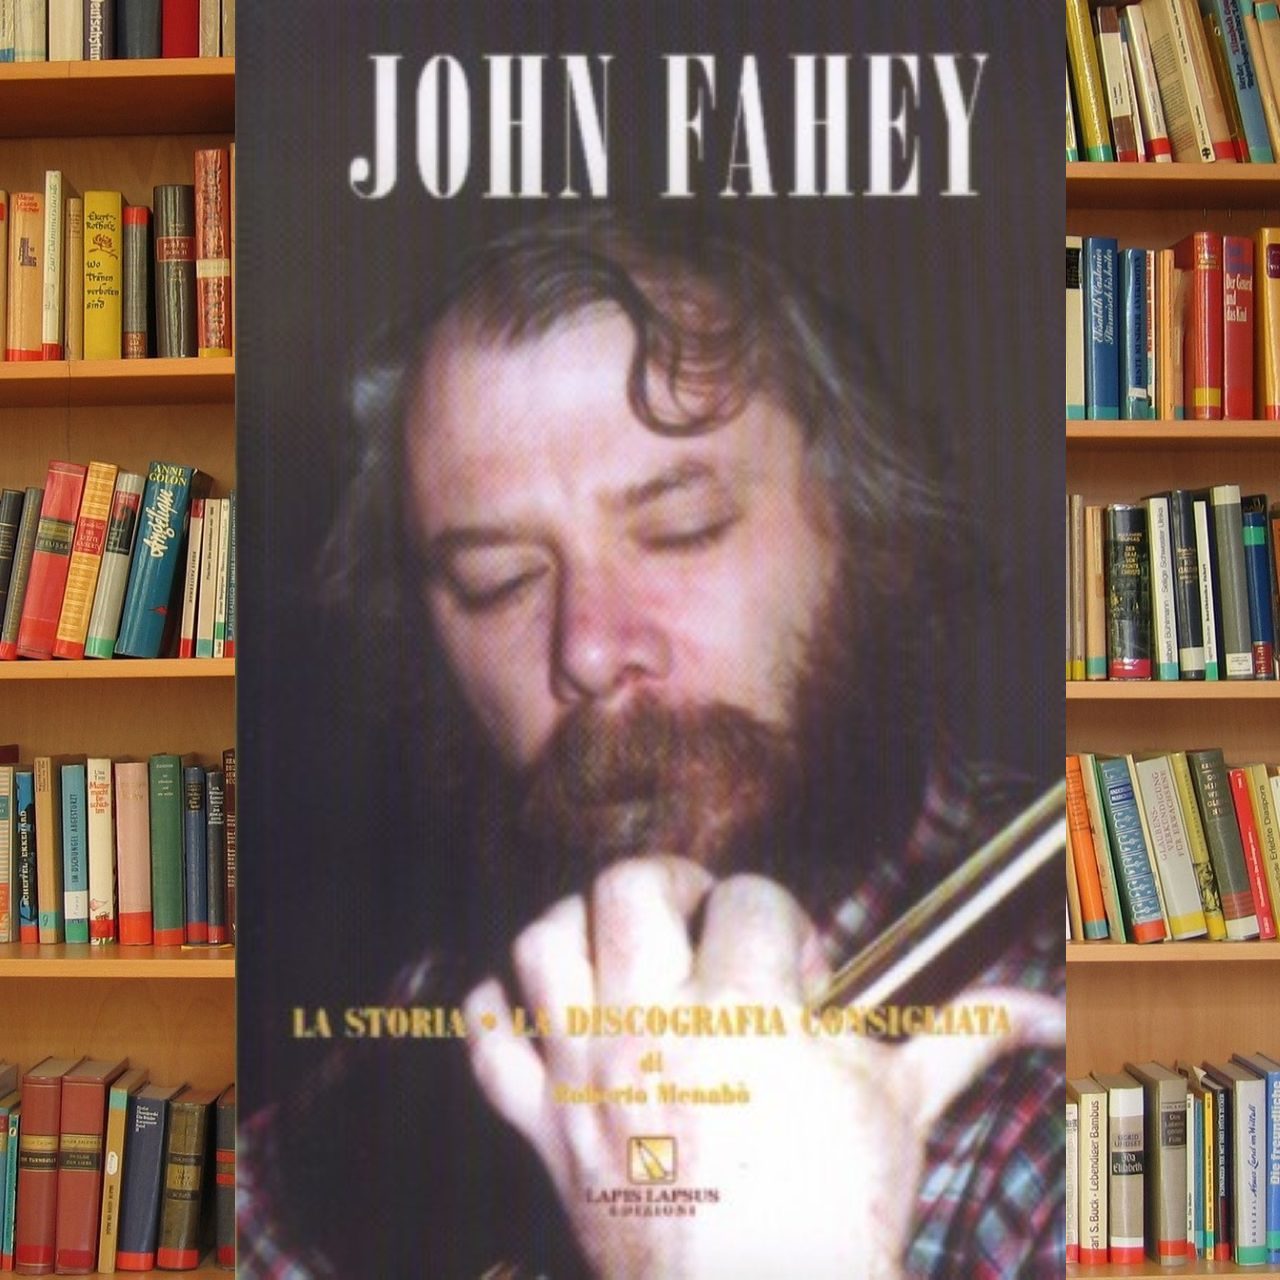 Roberto Menabò - John Fahey cover book